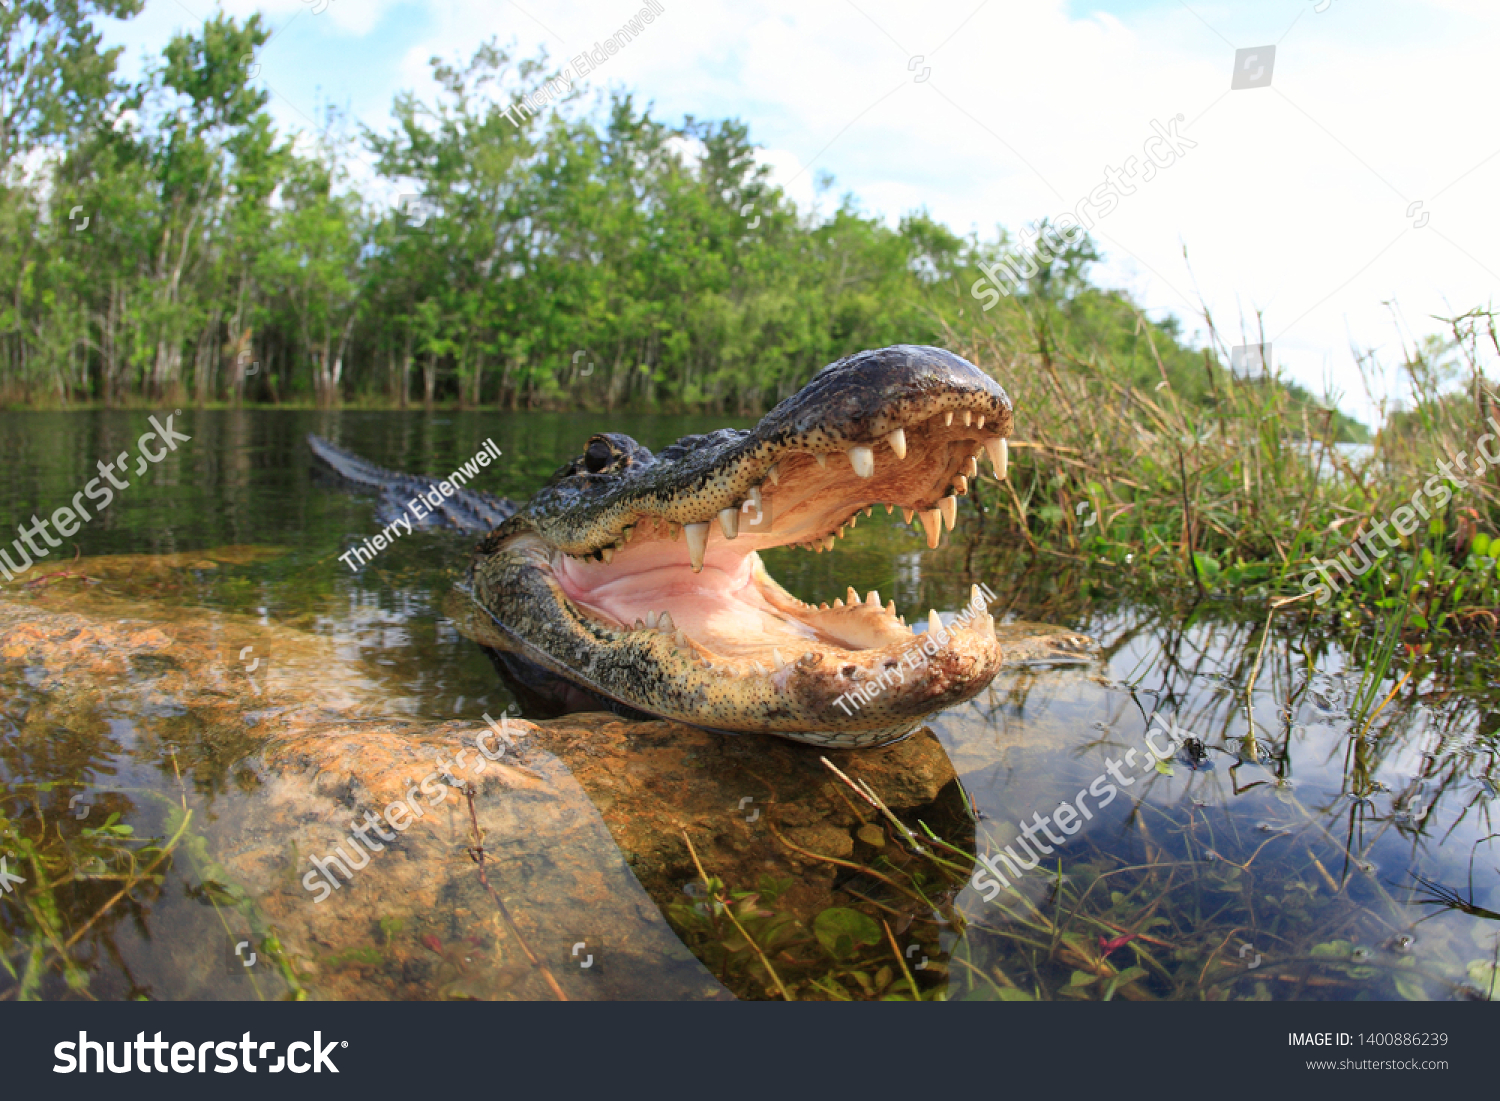 Swamp alligator 'Swamp People':